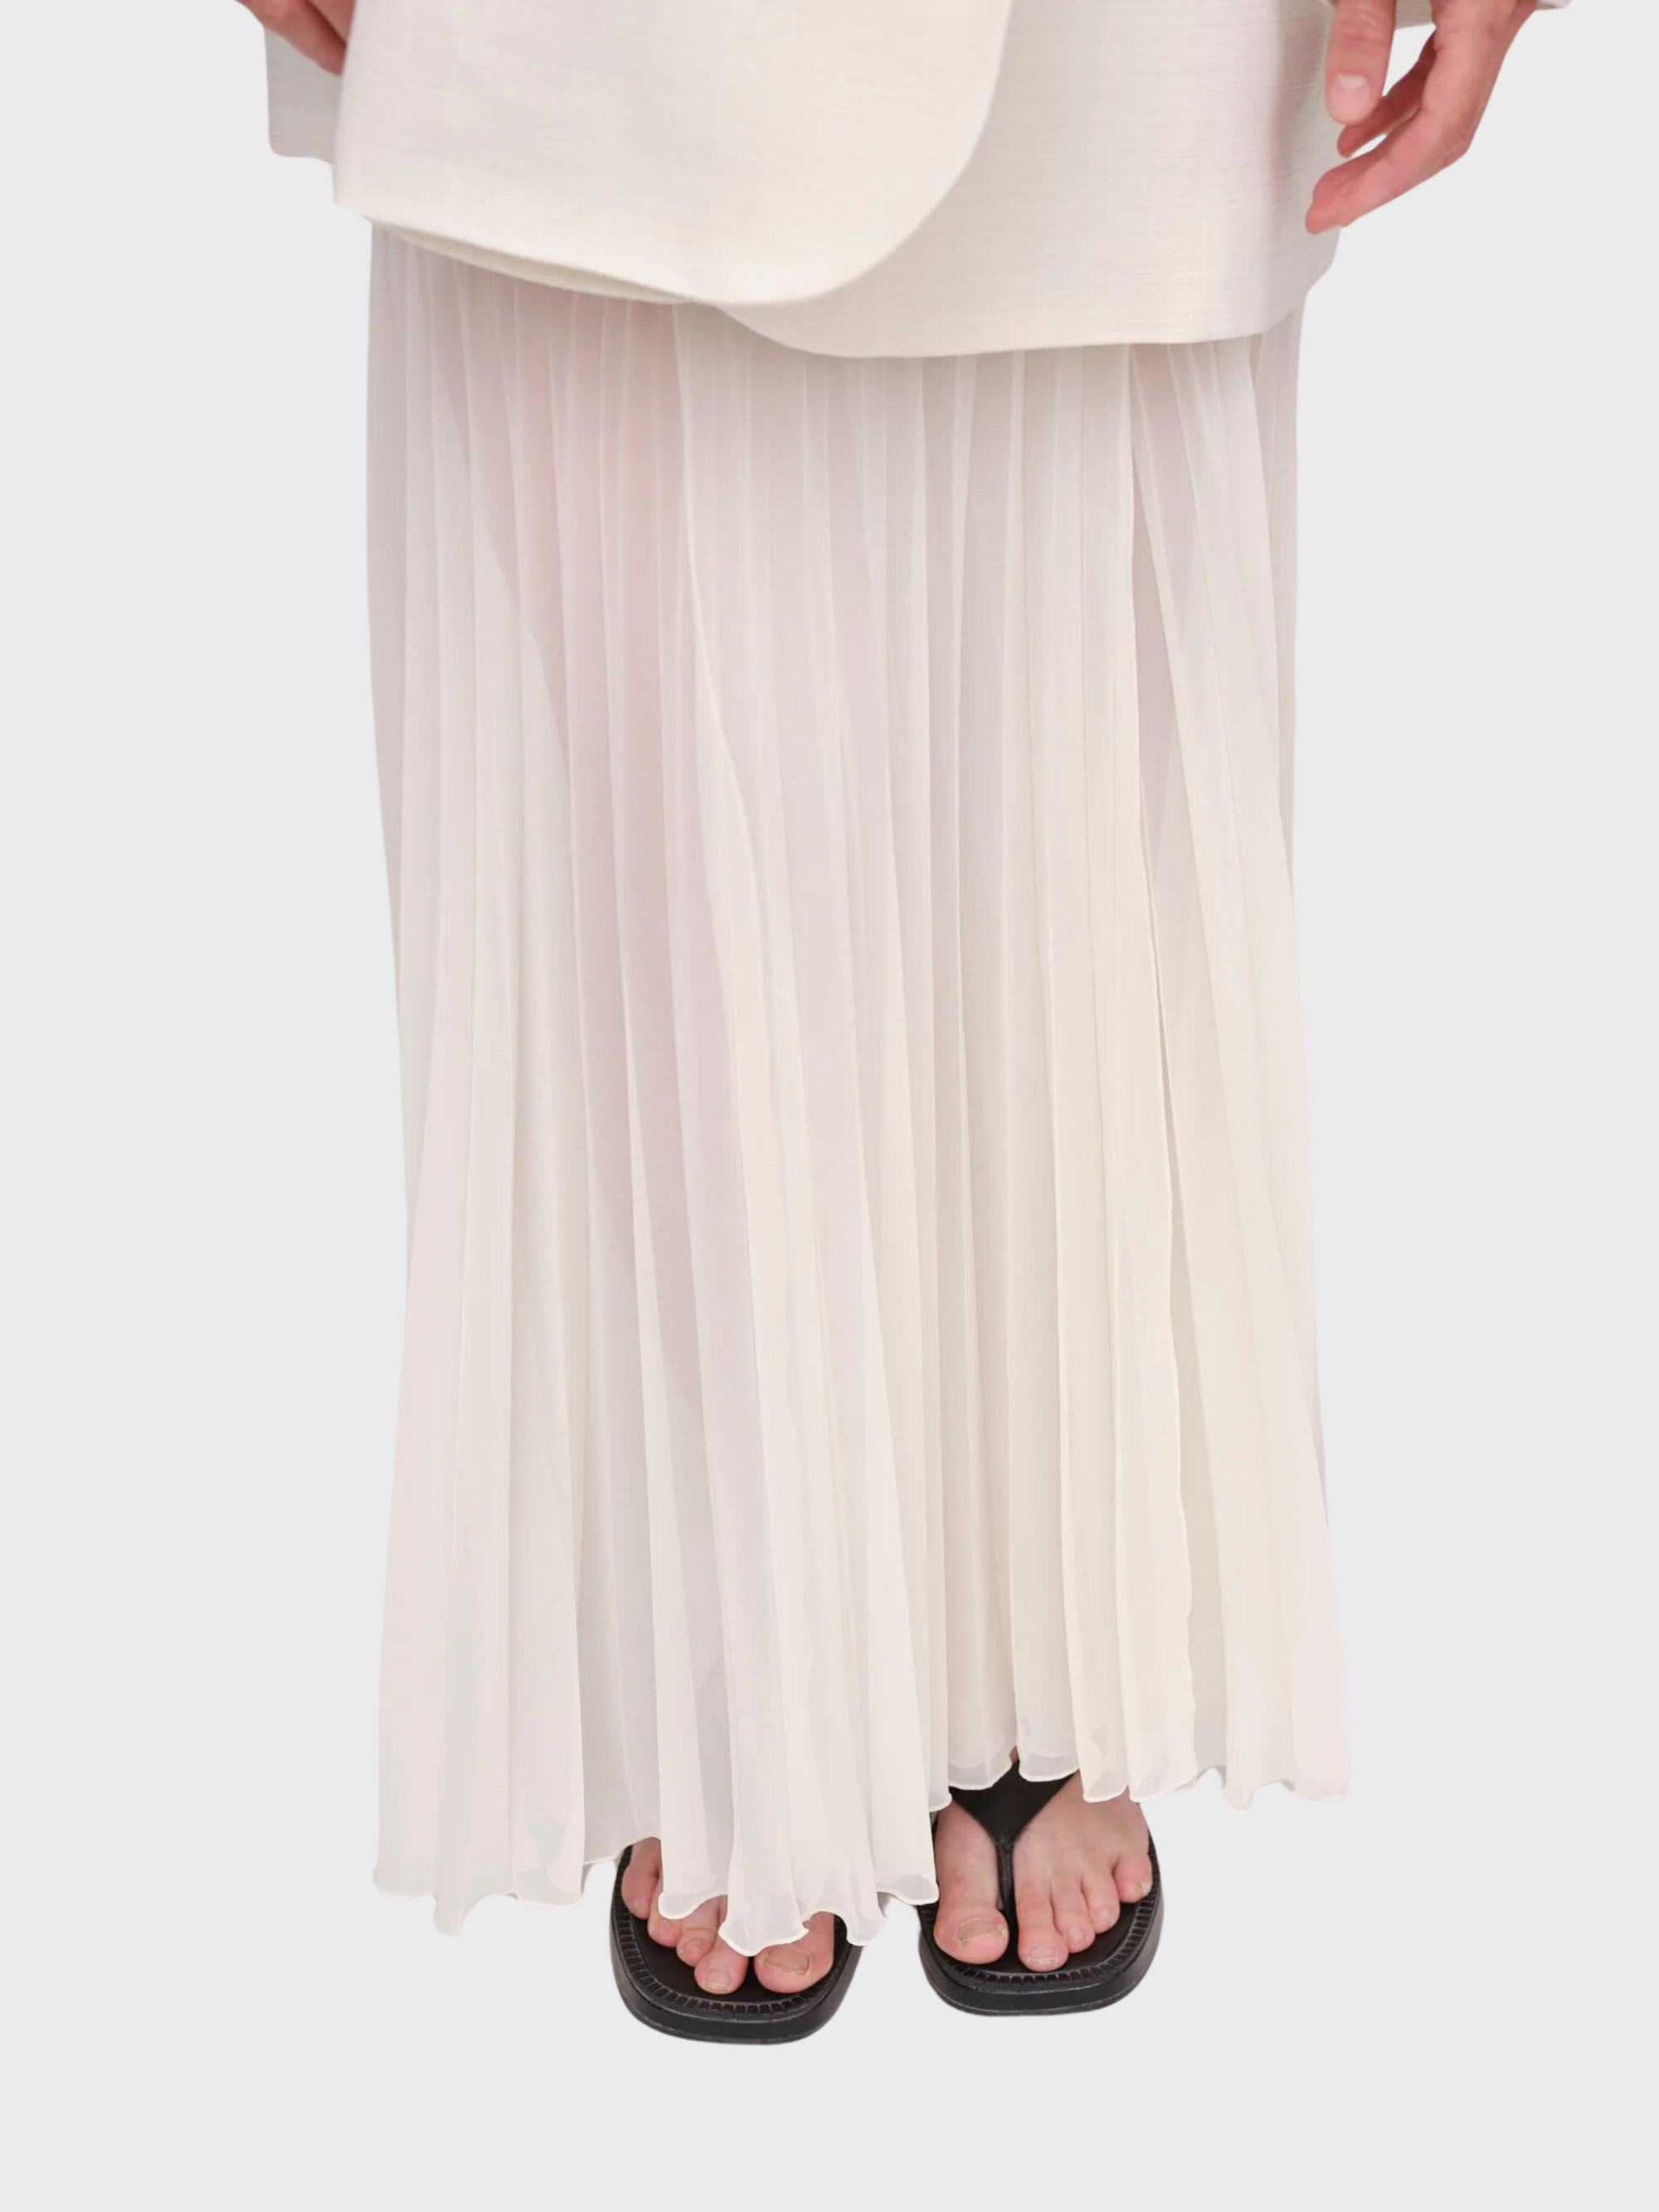 Herskind Nessa Skirt Medium White